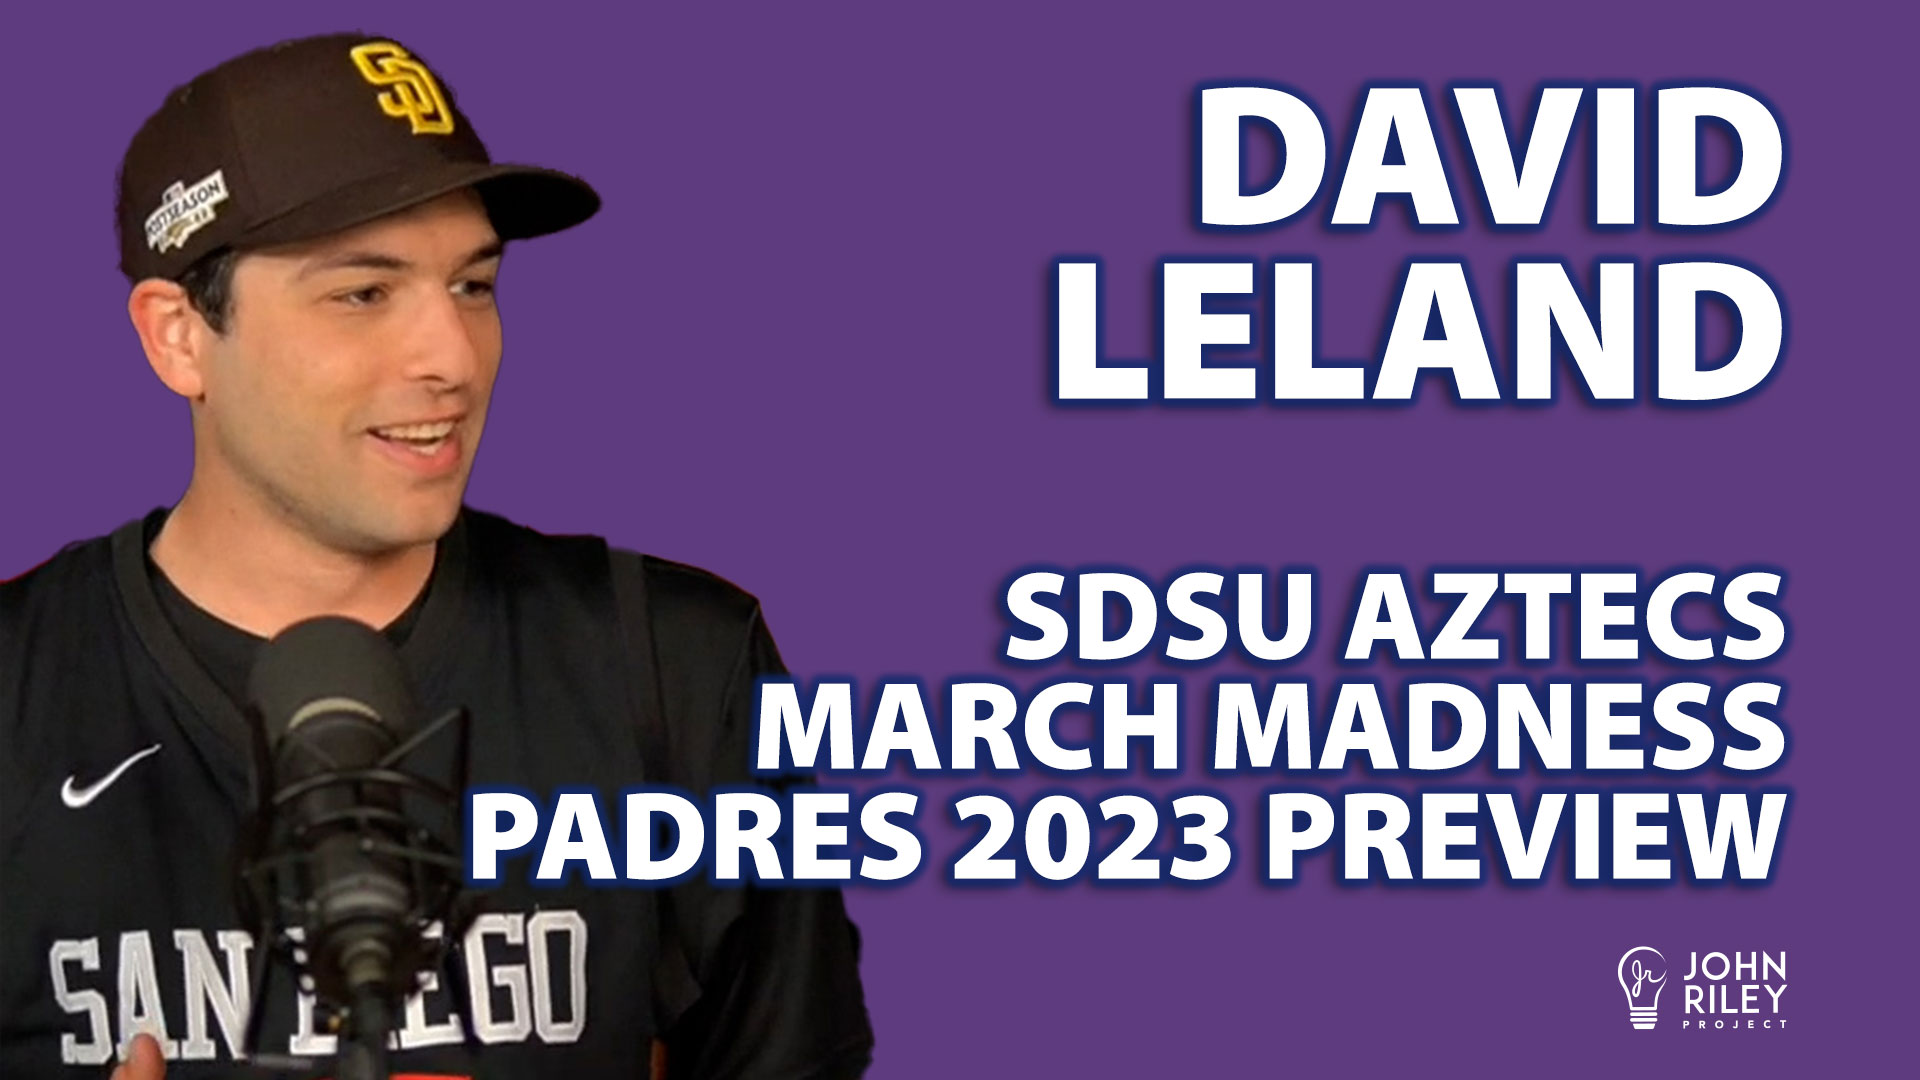 David Leland discusses the San Diego State Aztecs, Brian Dutcher, Matt Bradley, Aguek Arop, and March Madness 2023. We also discuss Fernando Tatis Jr, Manny Machado, and the San Diego Padres 2023 season.